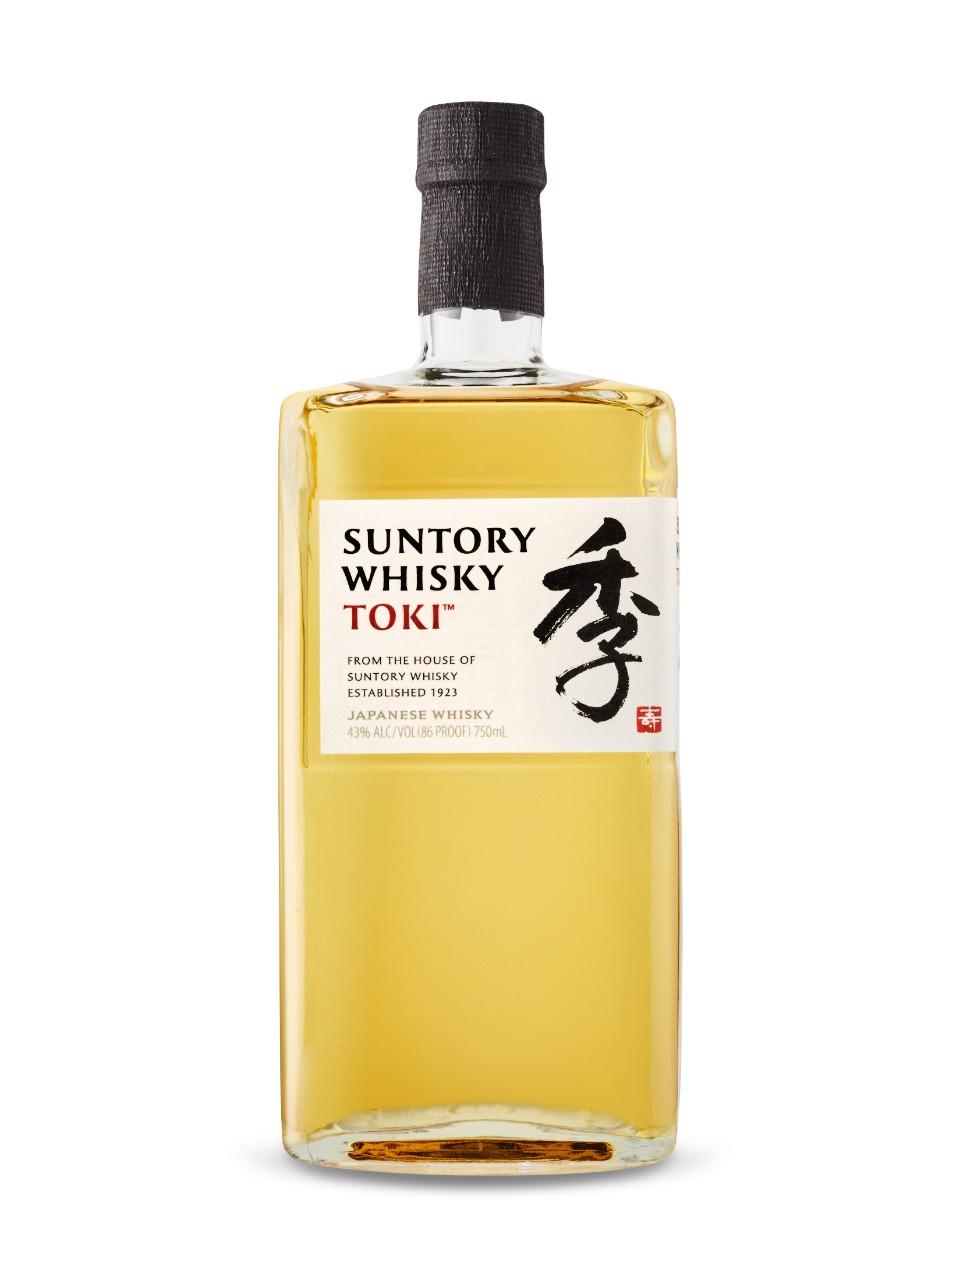 3. Japanese Whisky – Suntory Toki